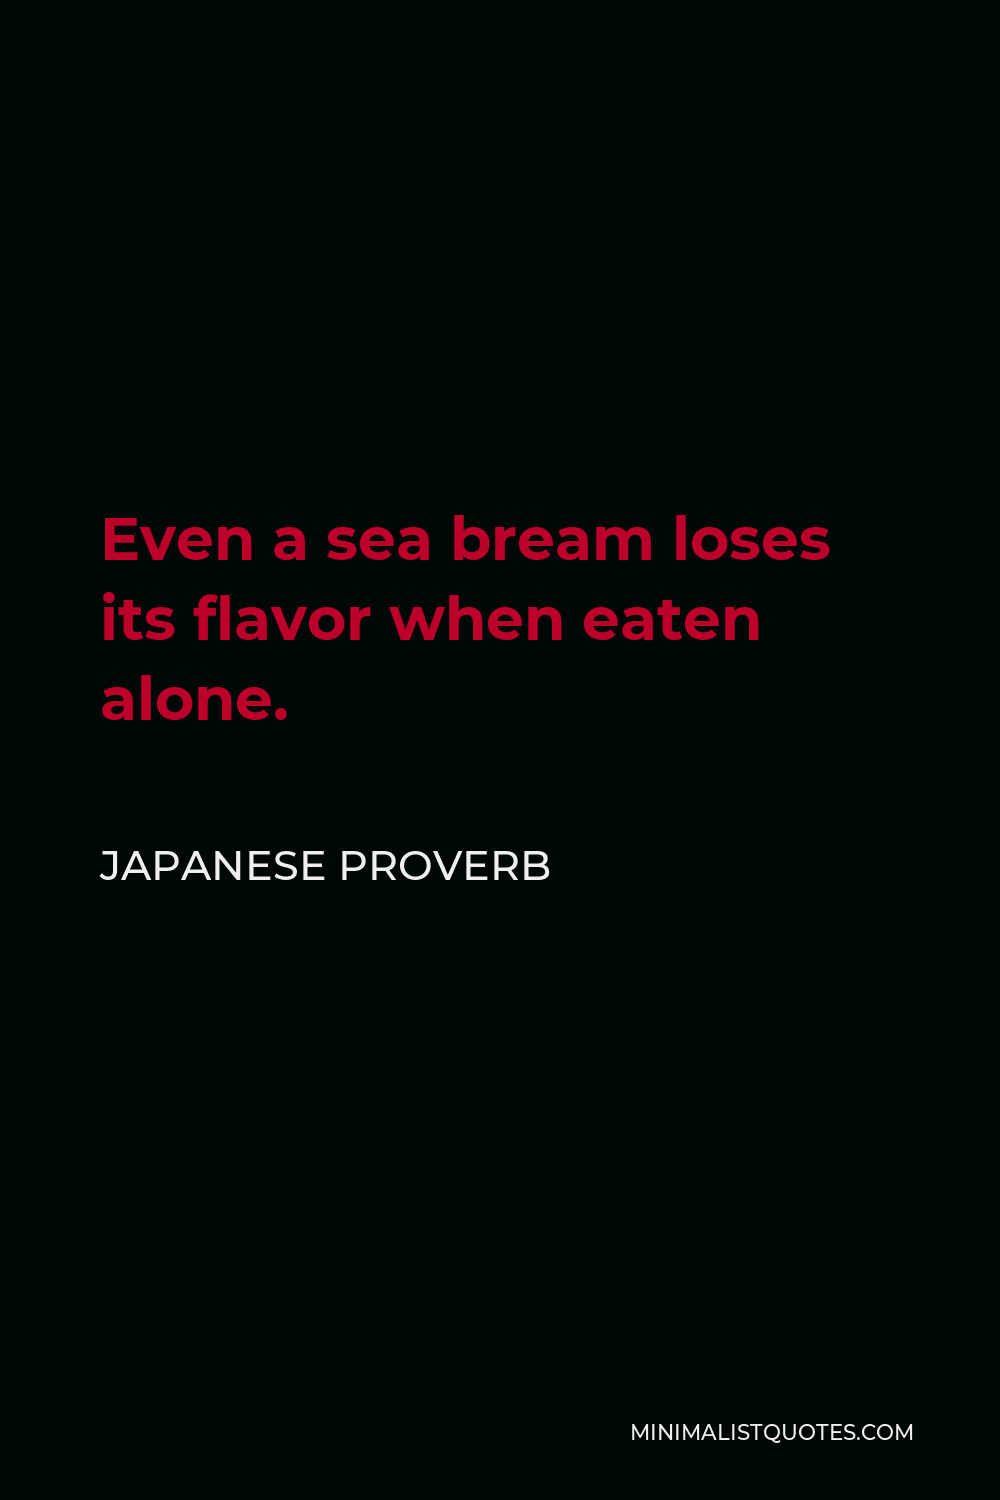 Japanese Proverb Quote - Even a sea bream loses its flavor when eaten alone.